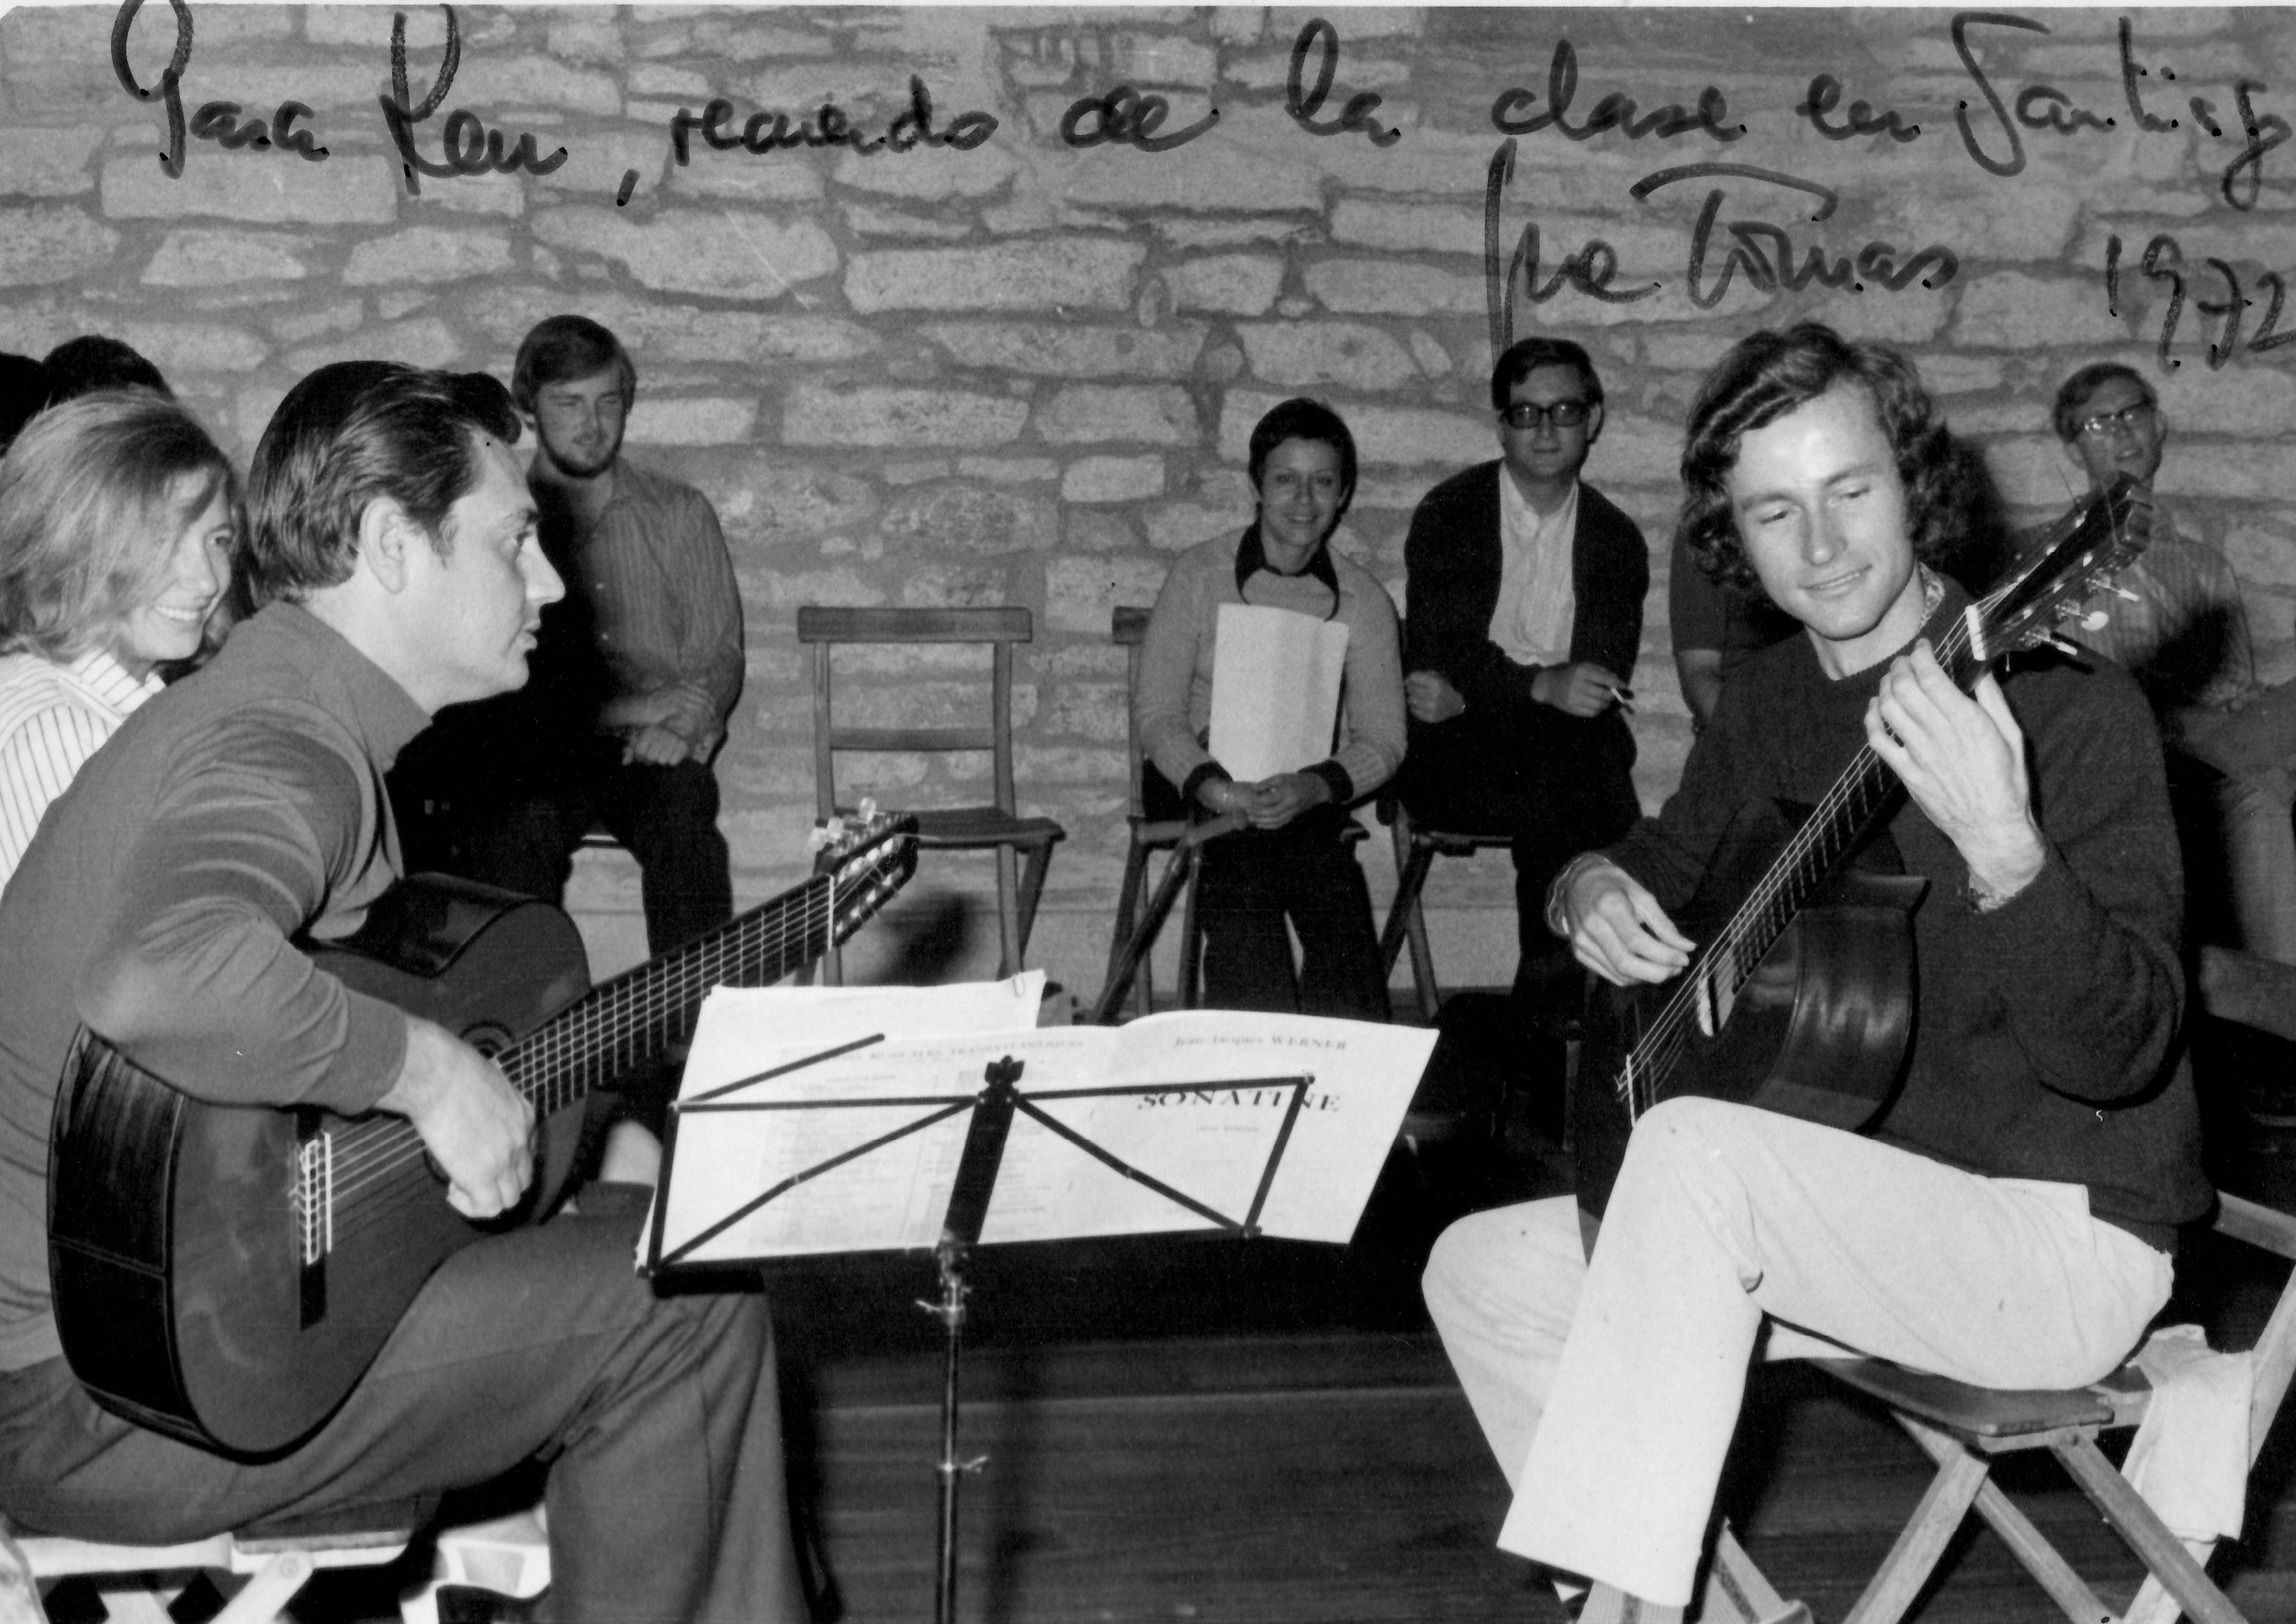 Ken Burns at the 1972 Andre Segovia Summer School in Santiago de Compostela (Jose Tomas - left, Ken Burns - right)